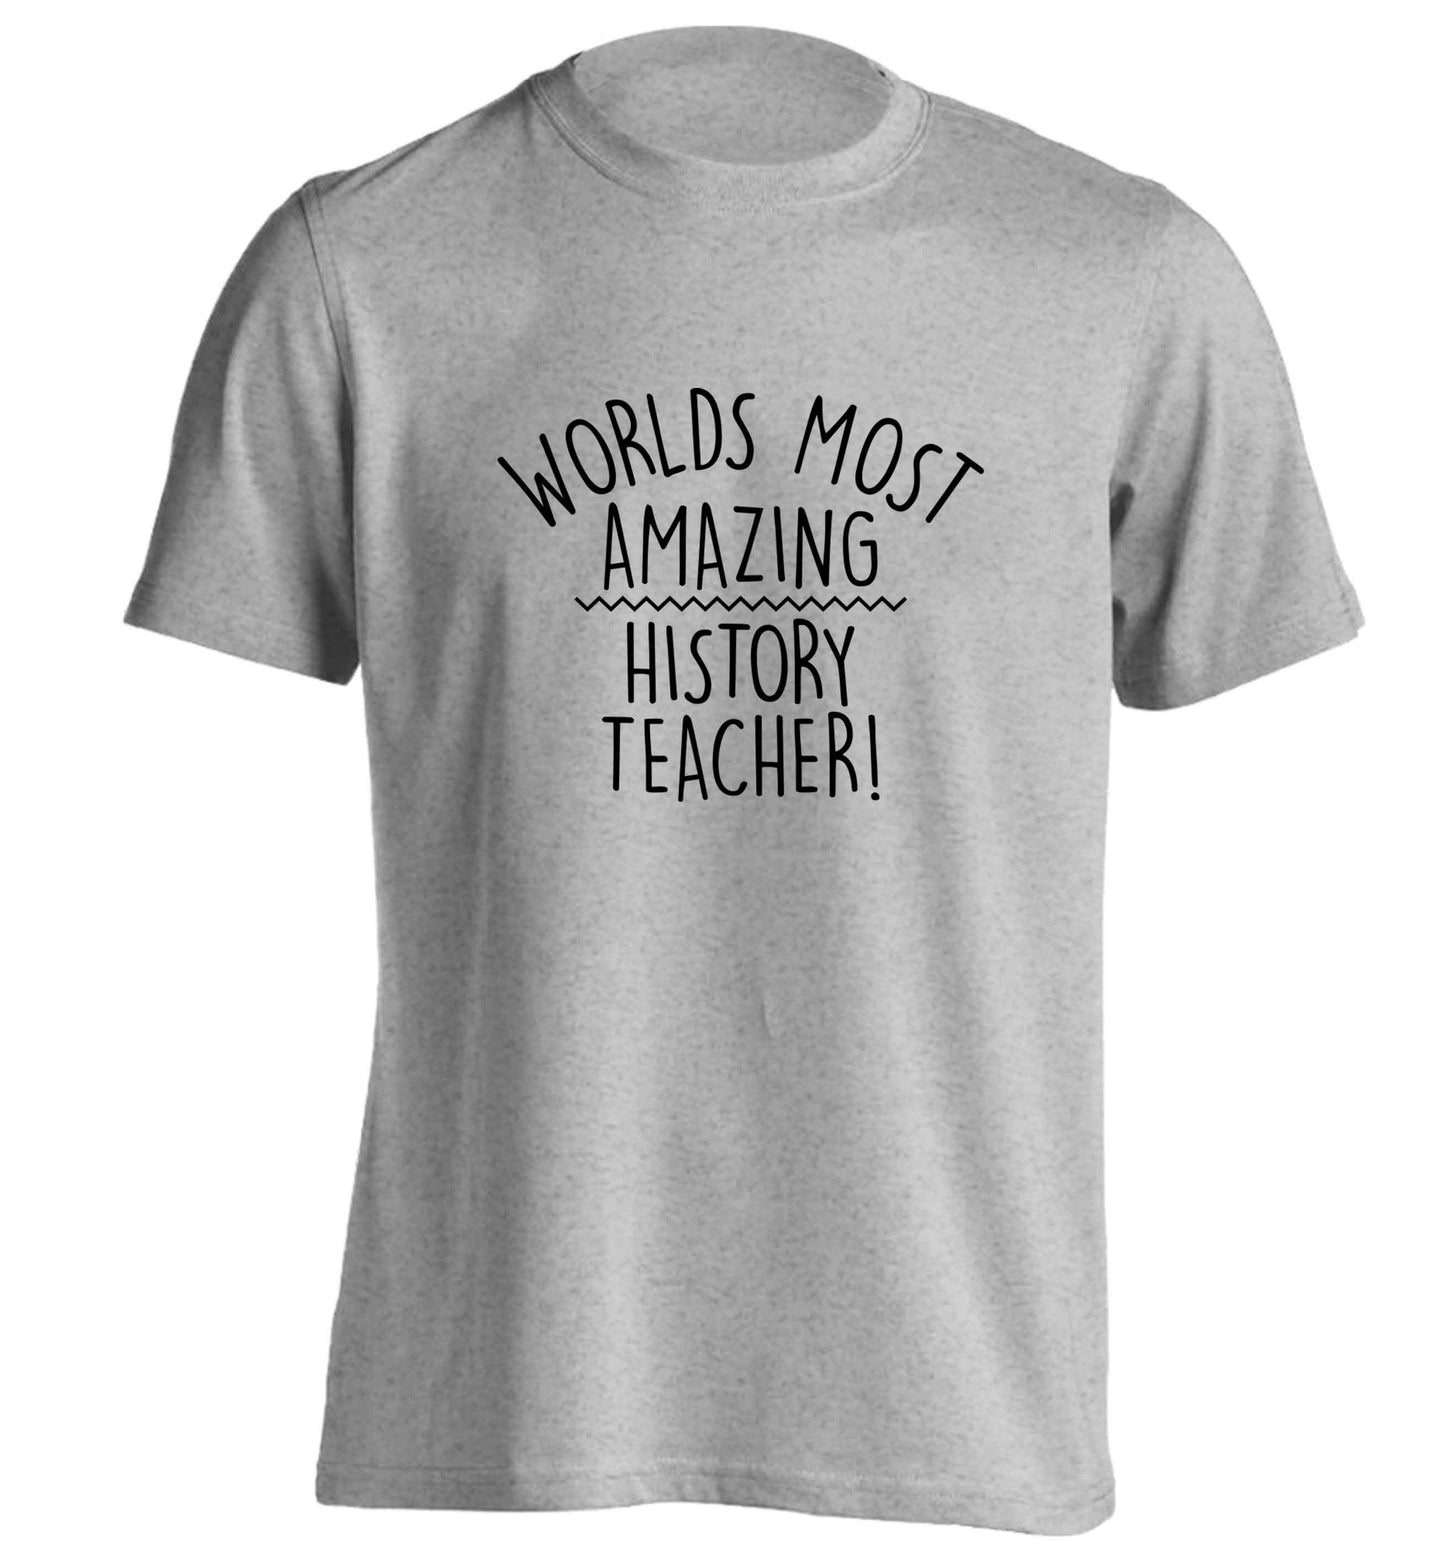 Worlds most amazing History teacher adults unisex grey Tshirt 2XL